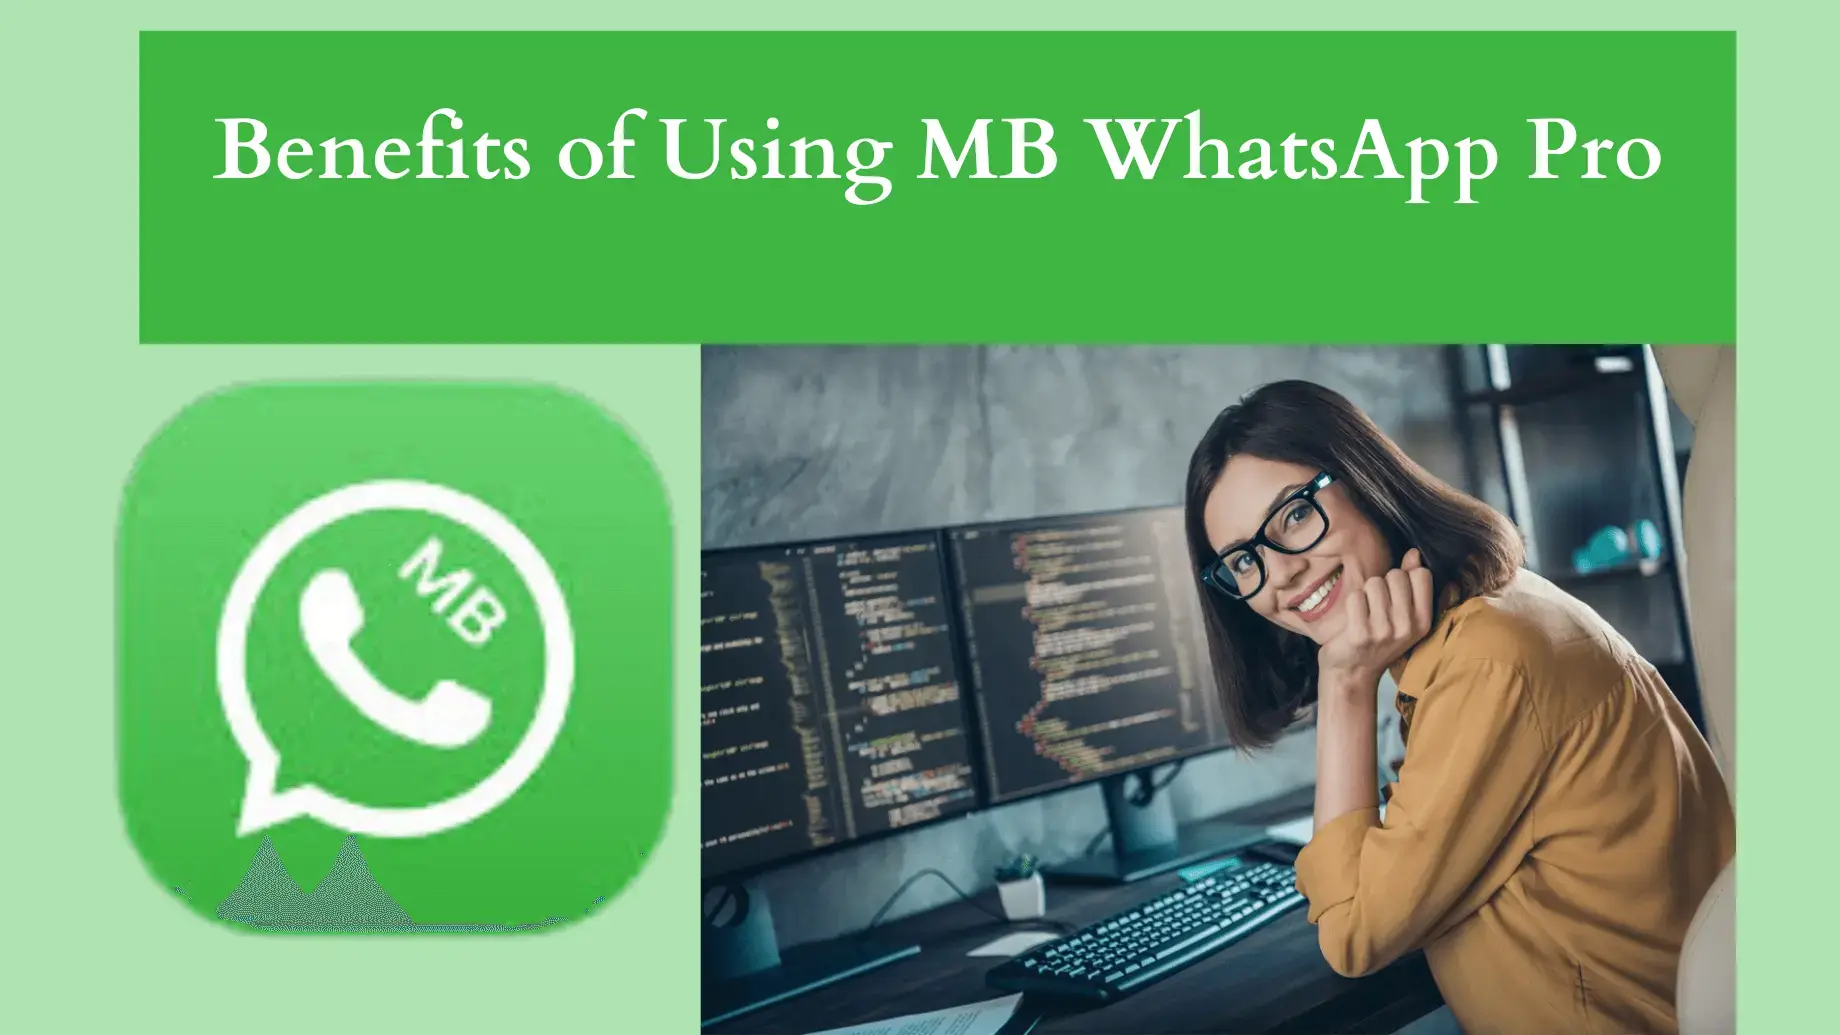 MB WhatsApp Pro